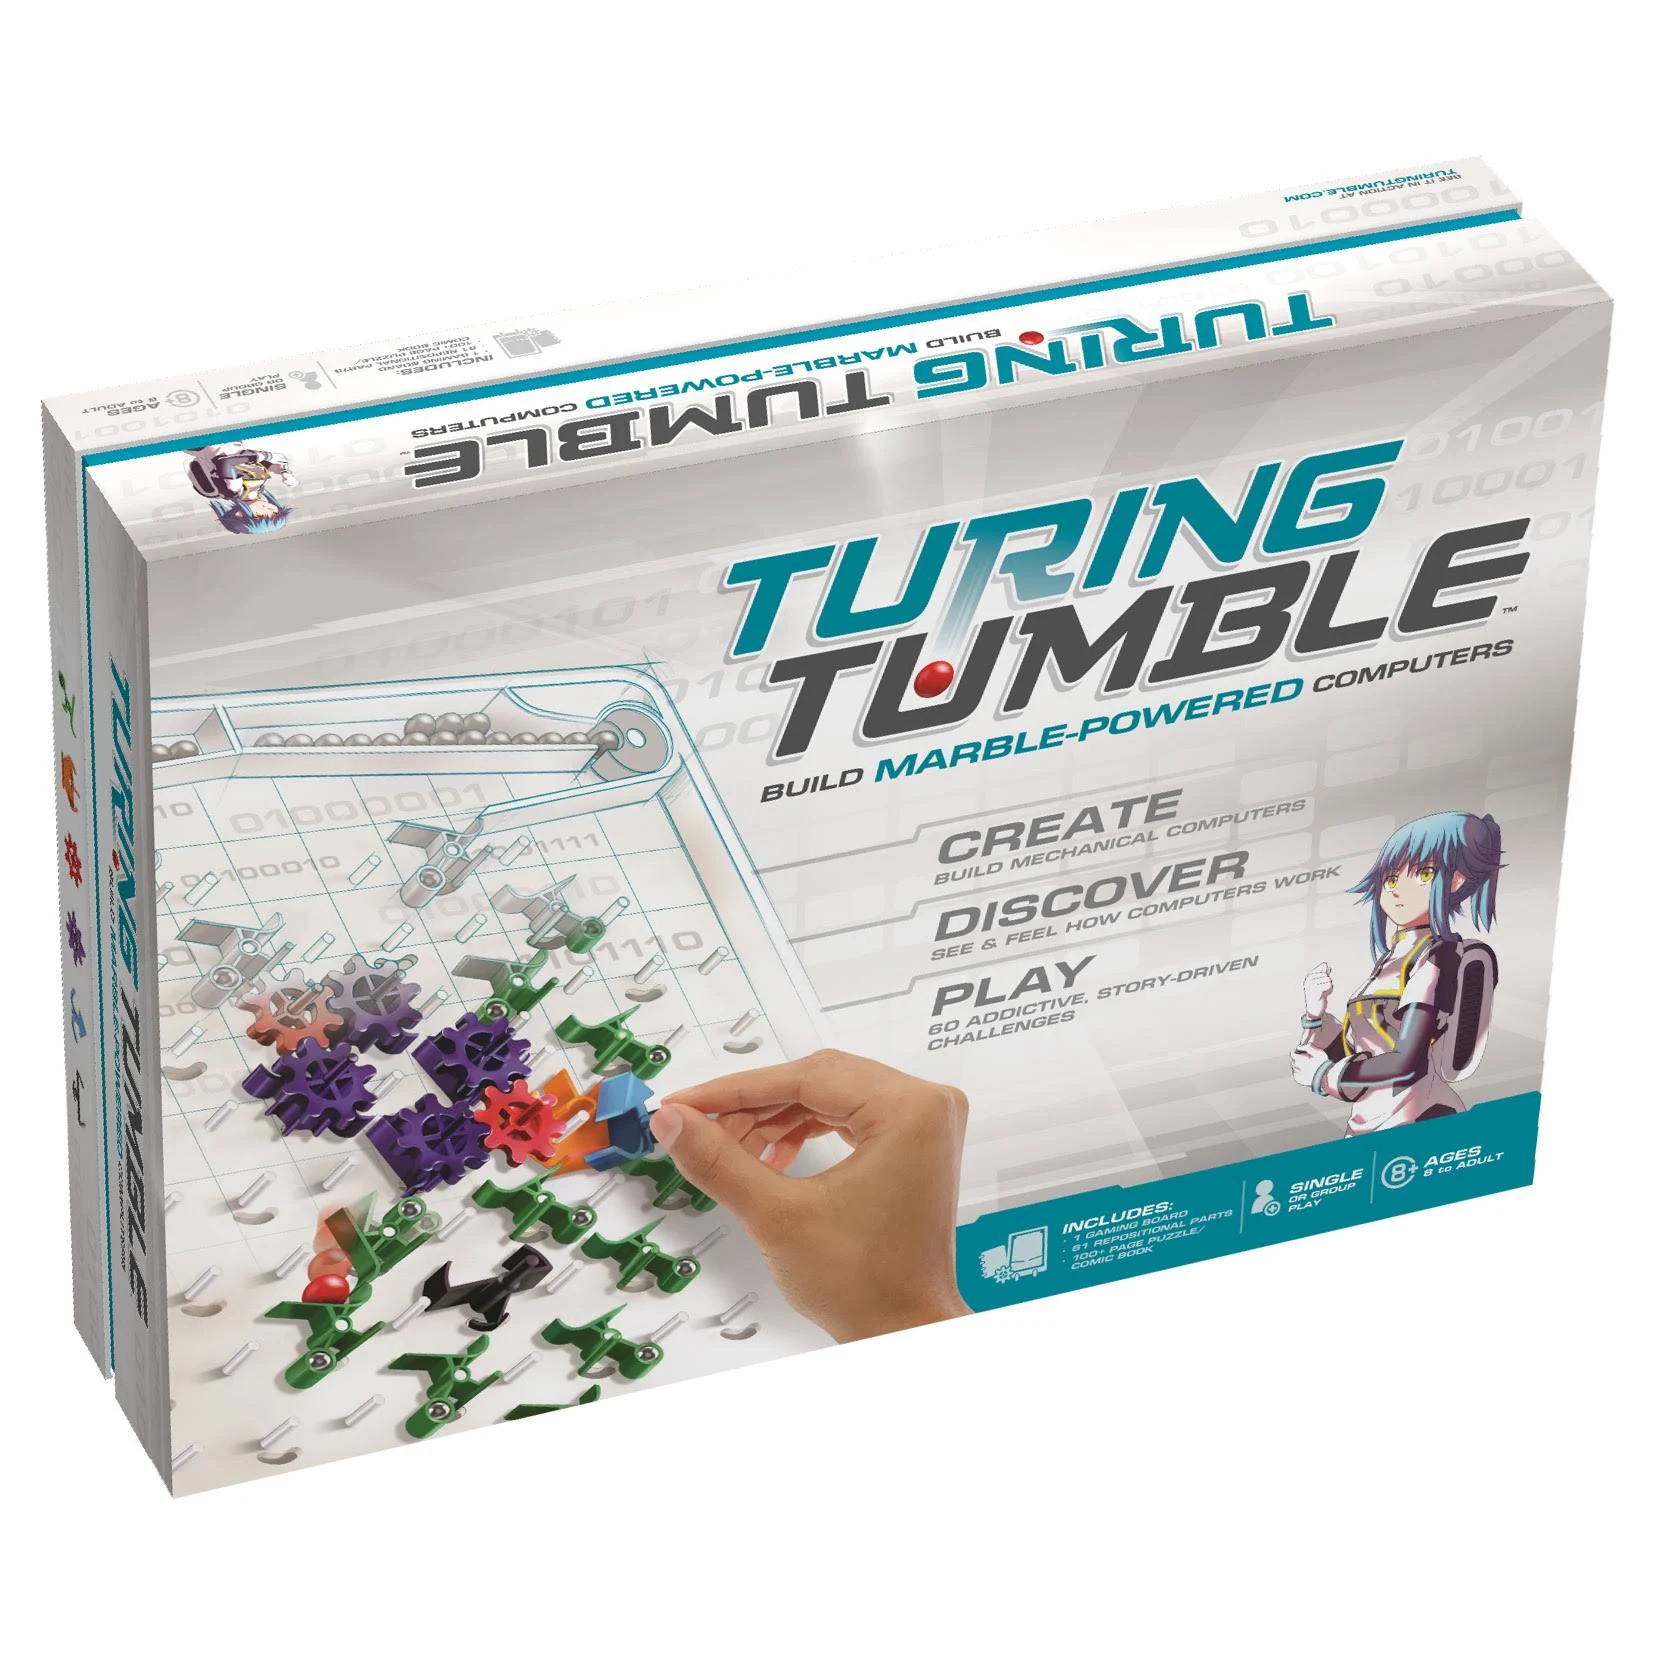 Turing Tumble